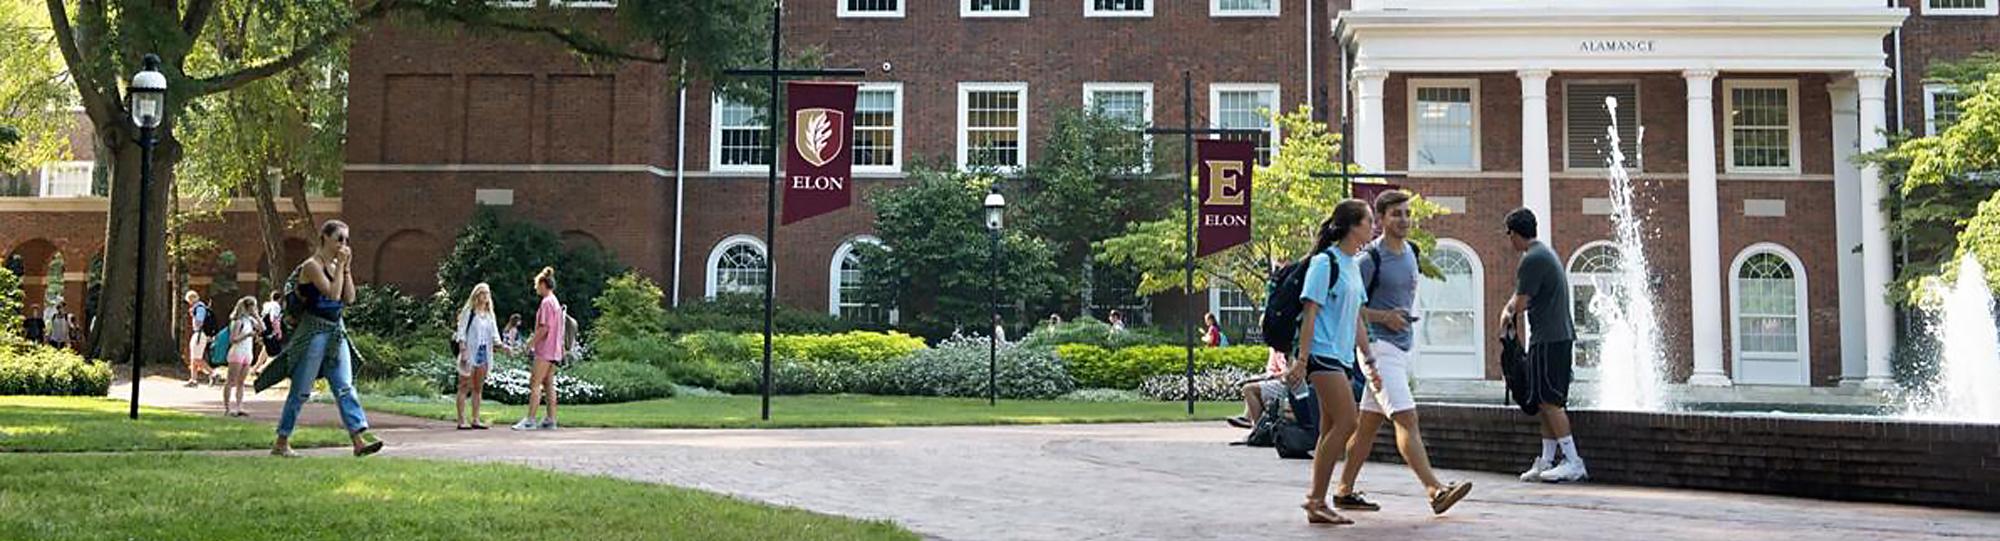 Elon University Campus